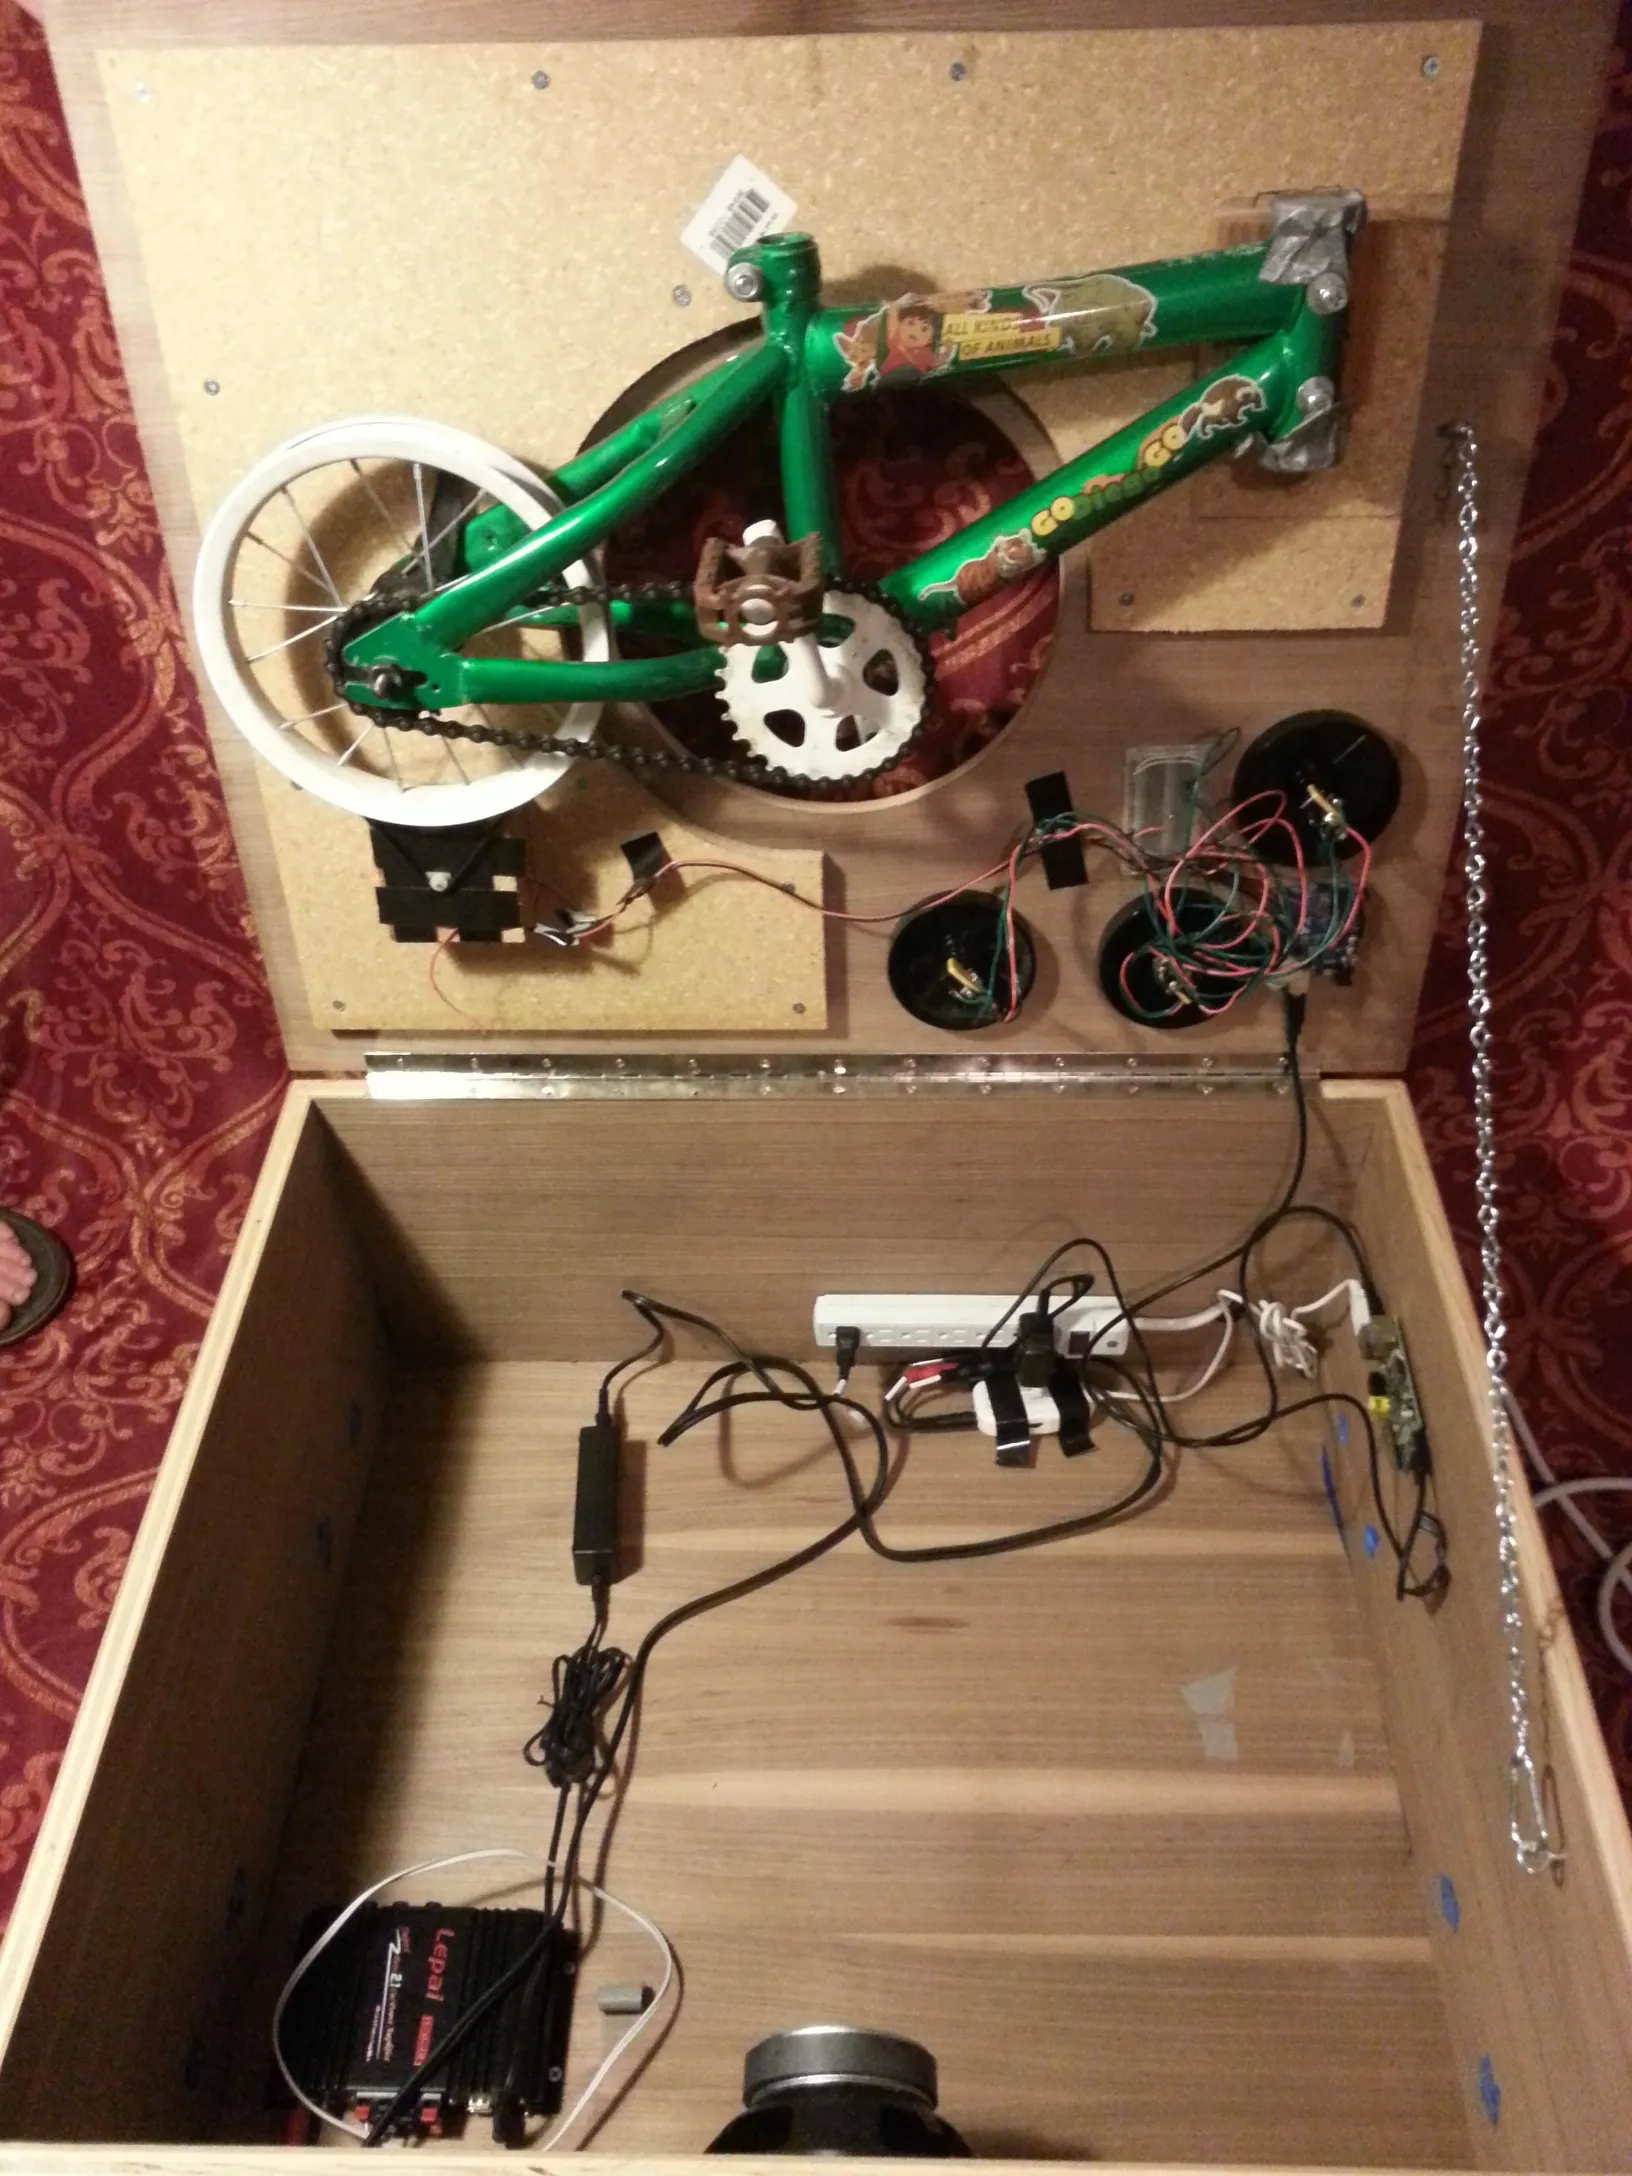 The intonarumori bike box.